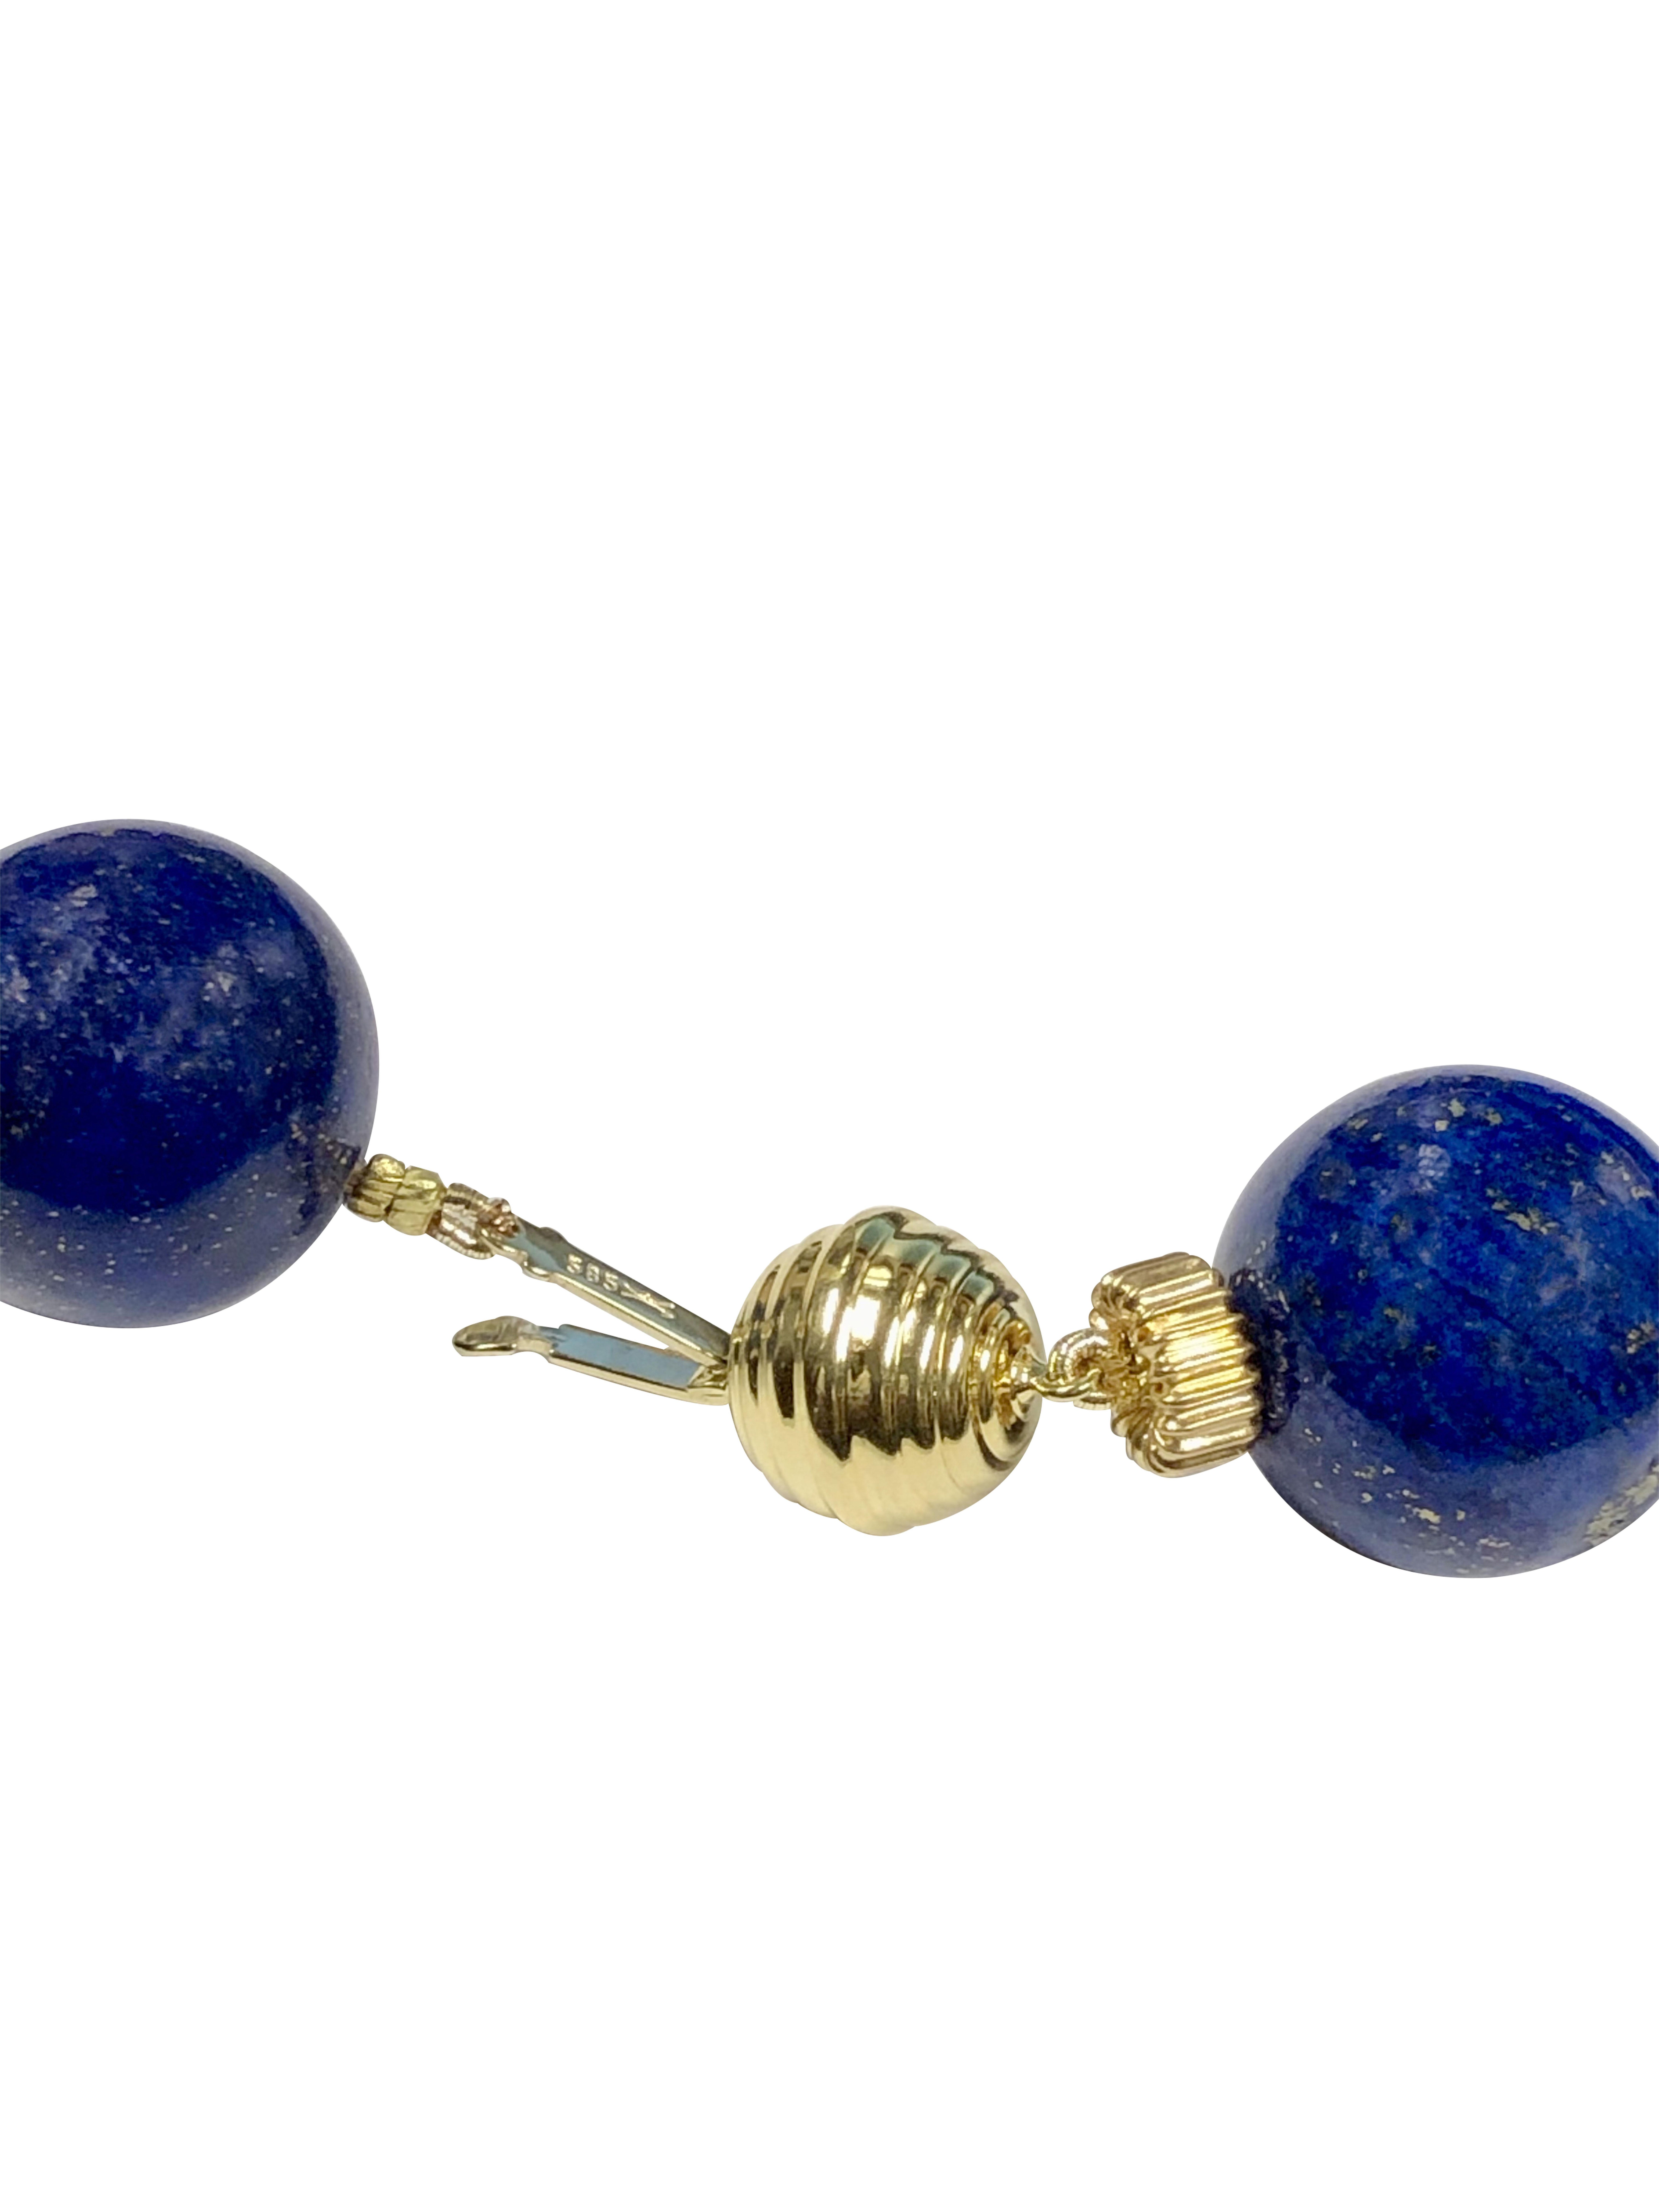 real lapis lazuli necklace